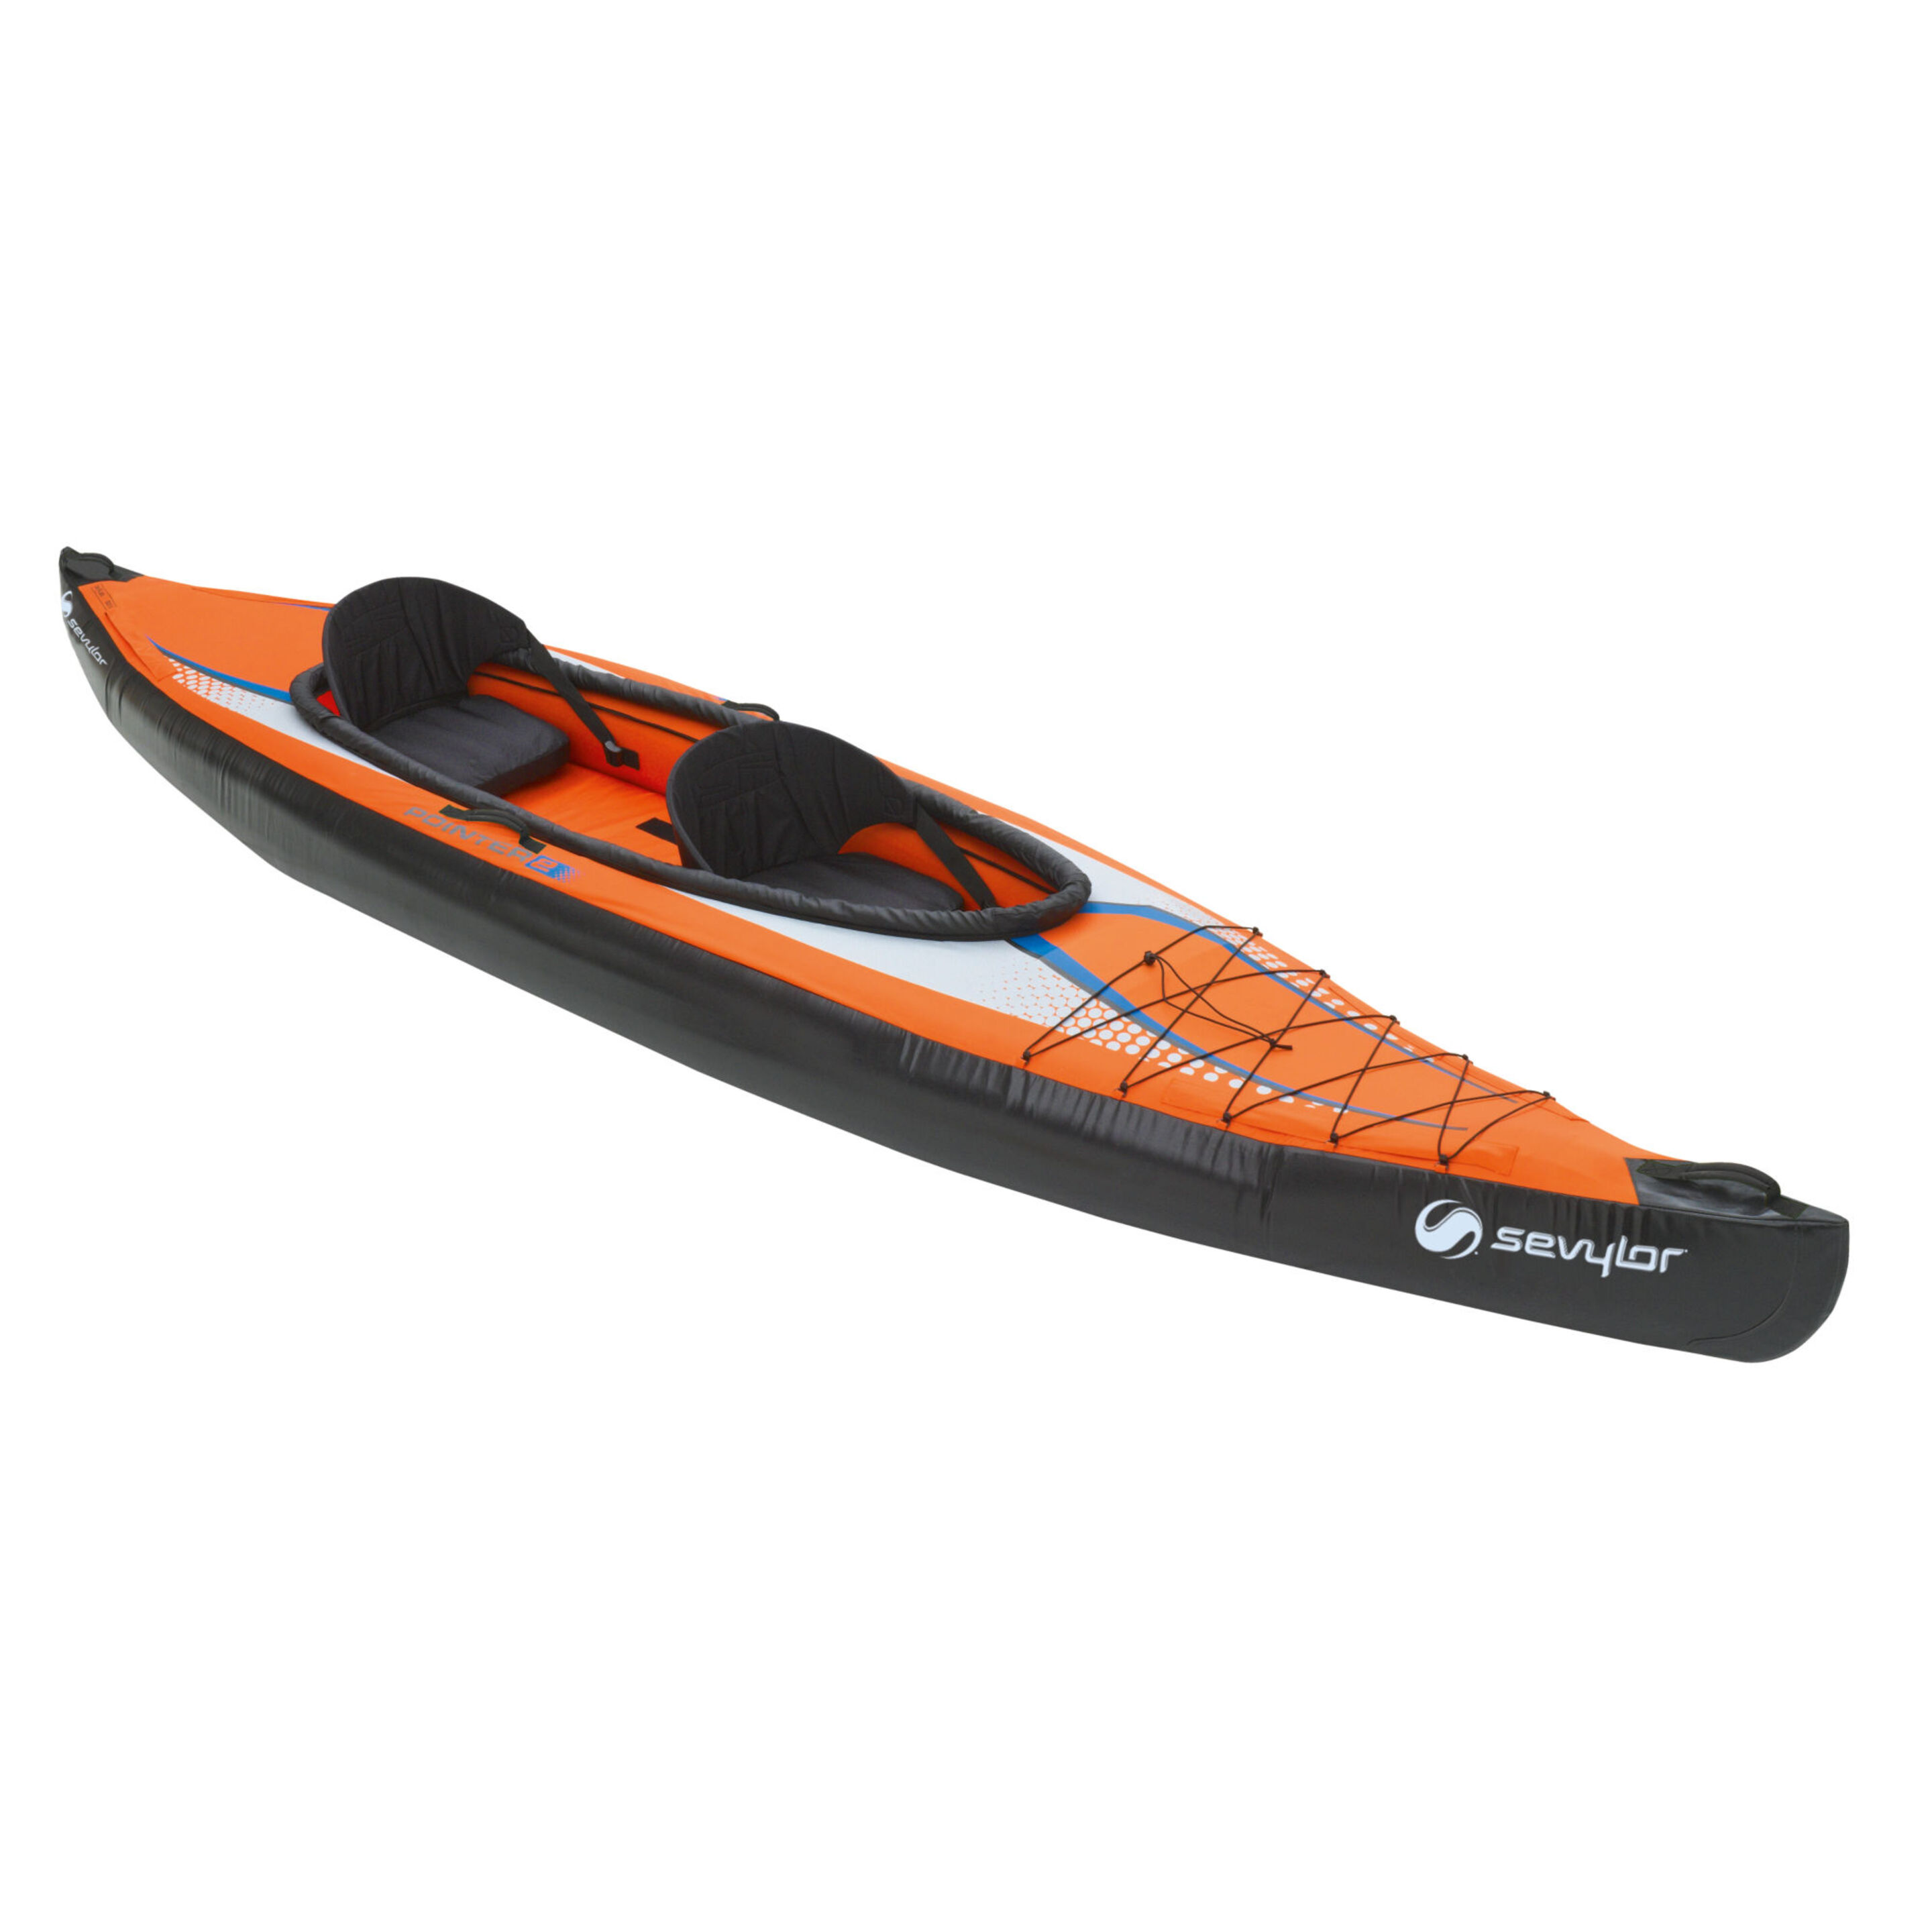 Kayak Insuflável Sevylor Pointer K2 - Laranja/Preto - Kayak 2 lugares | Sport Zone MKP